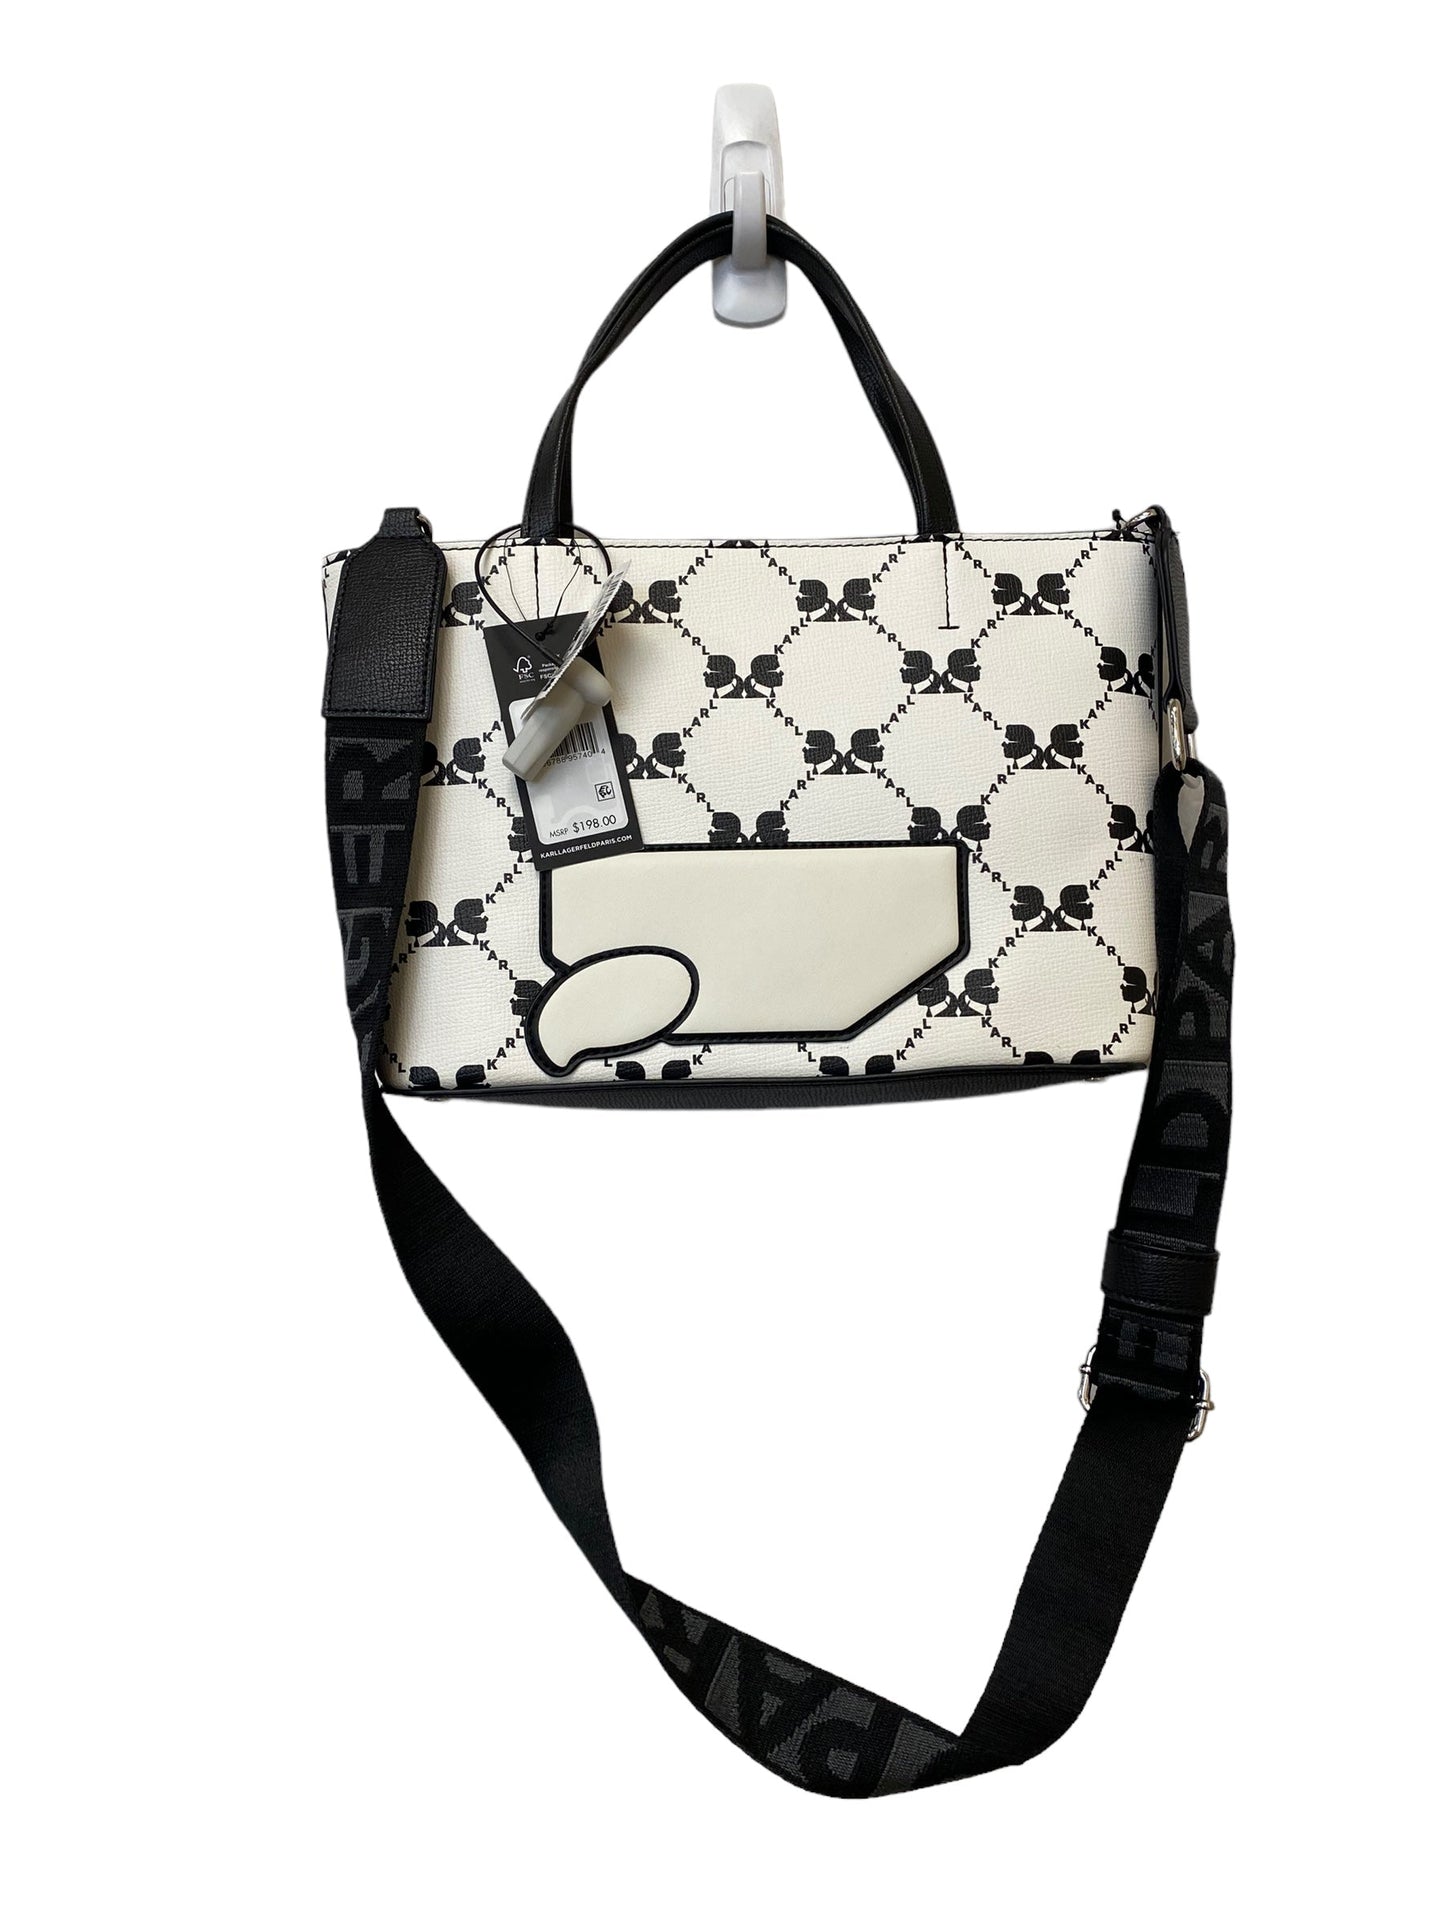 Handbag Designer By Karl Lagerfeld  Size: Medium